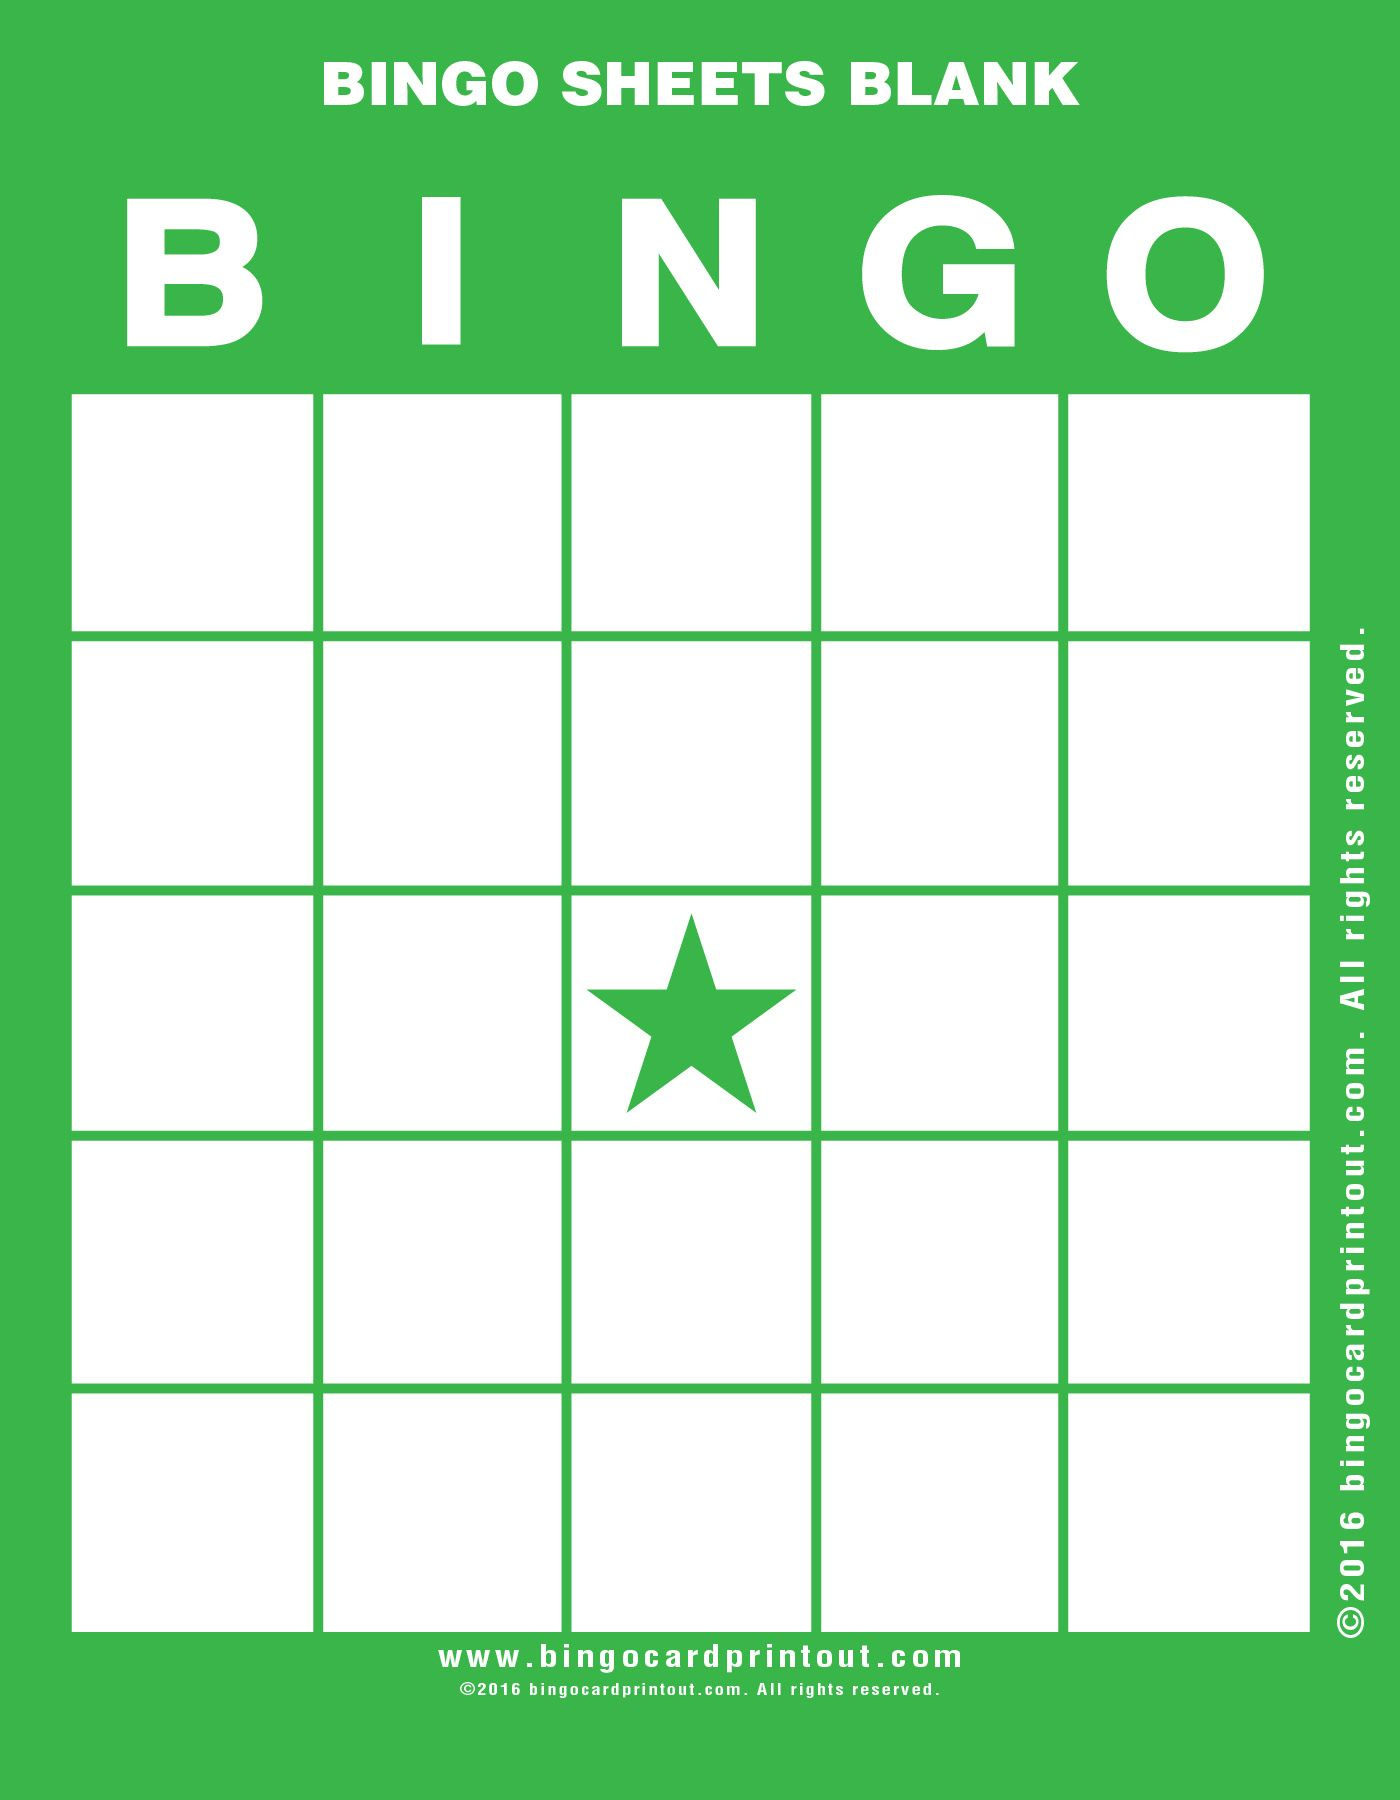 Bingo Sheets Blank 4 | Bingo Cards Printable, Bingo Card